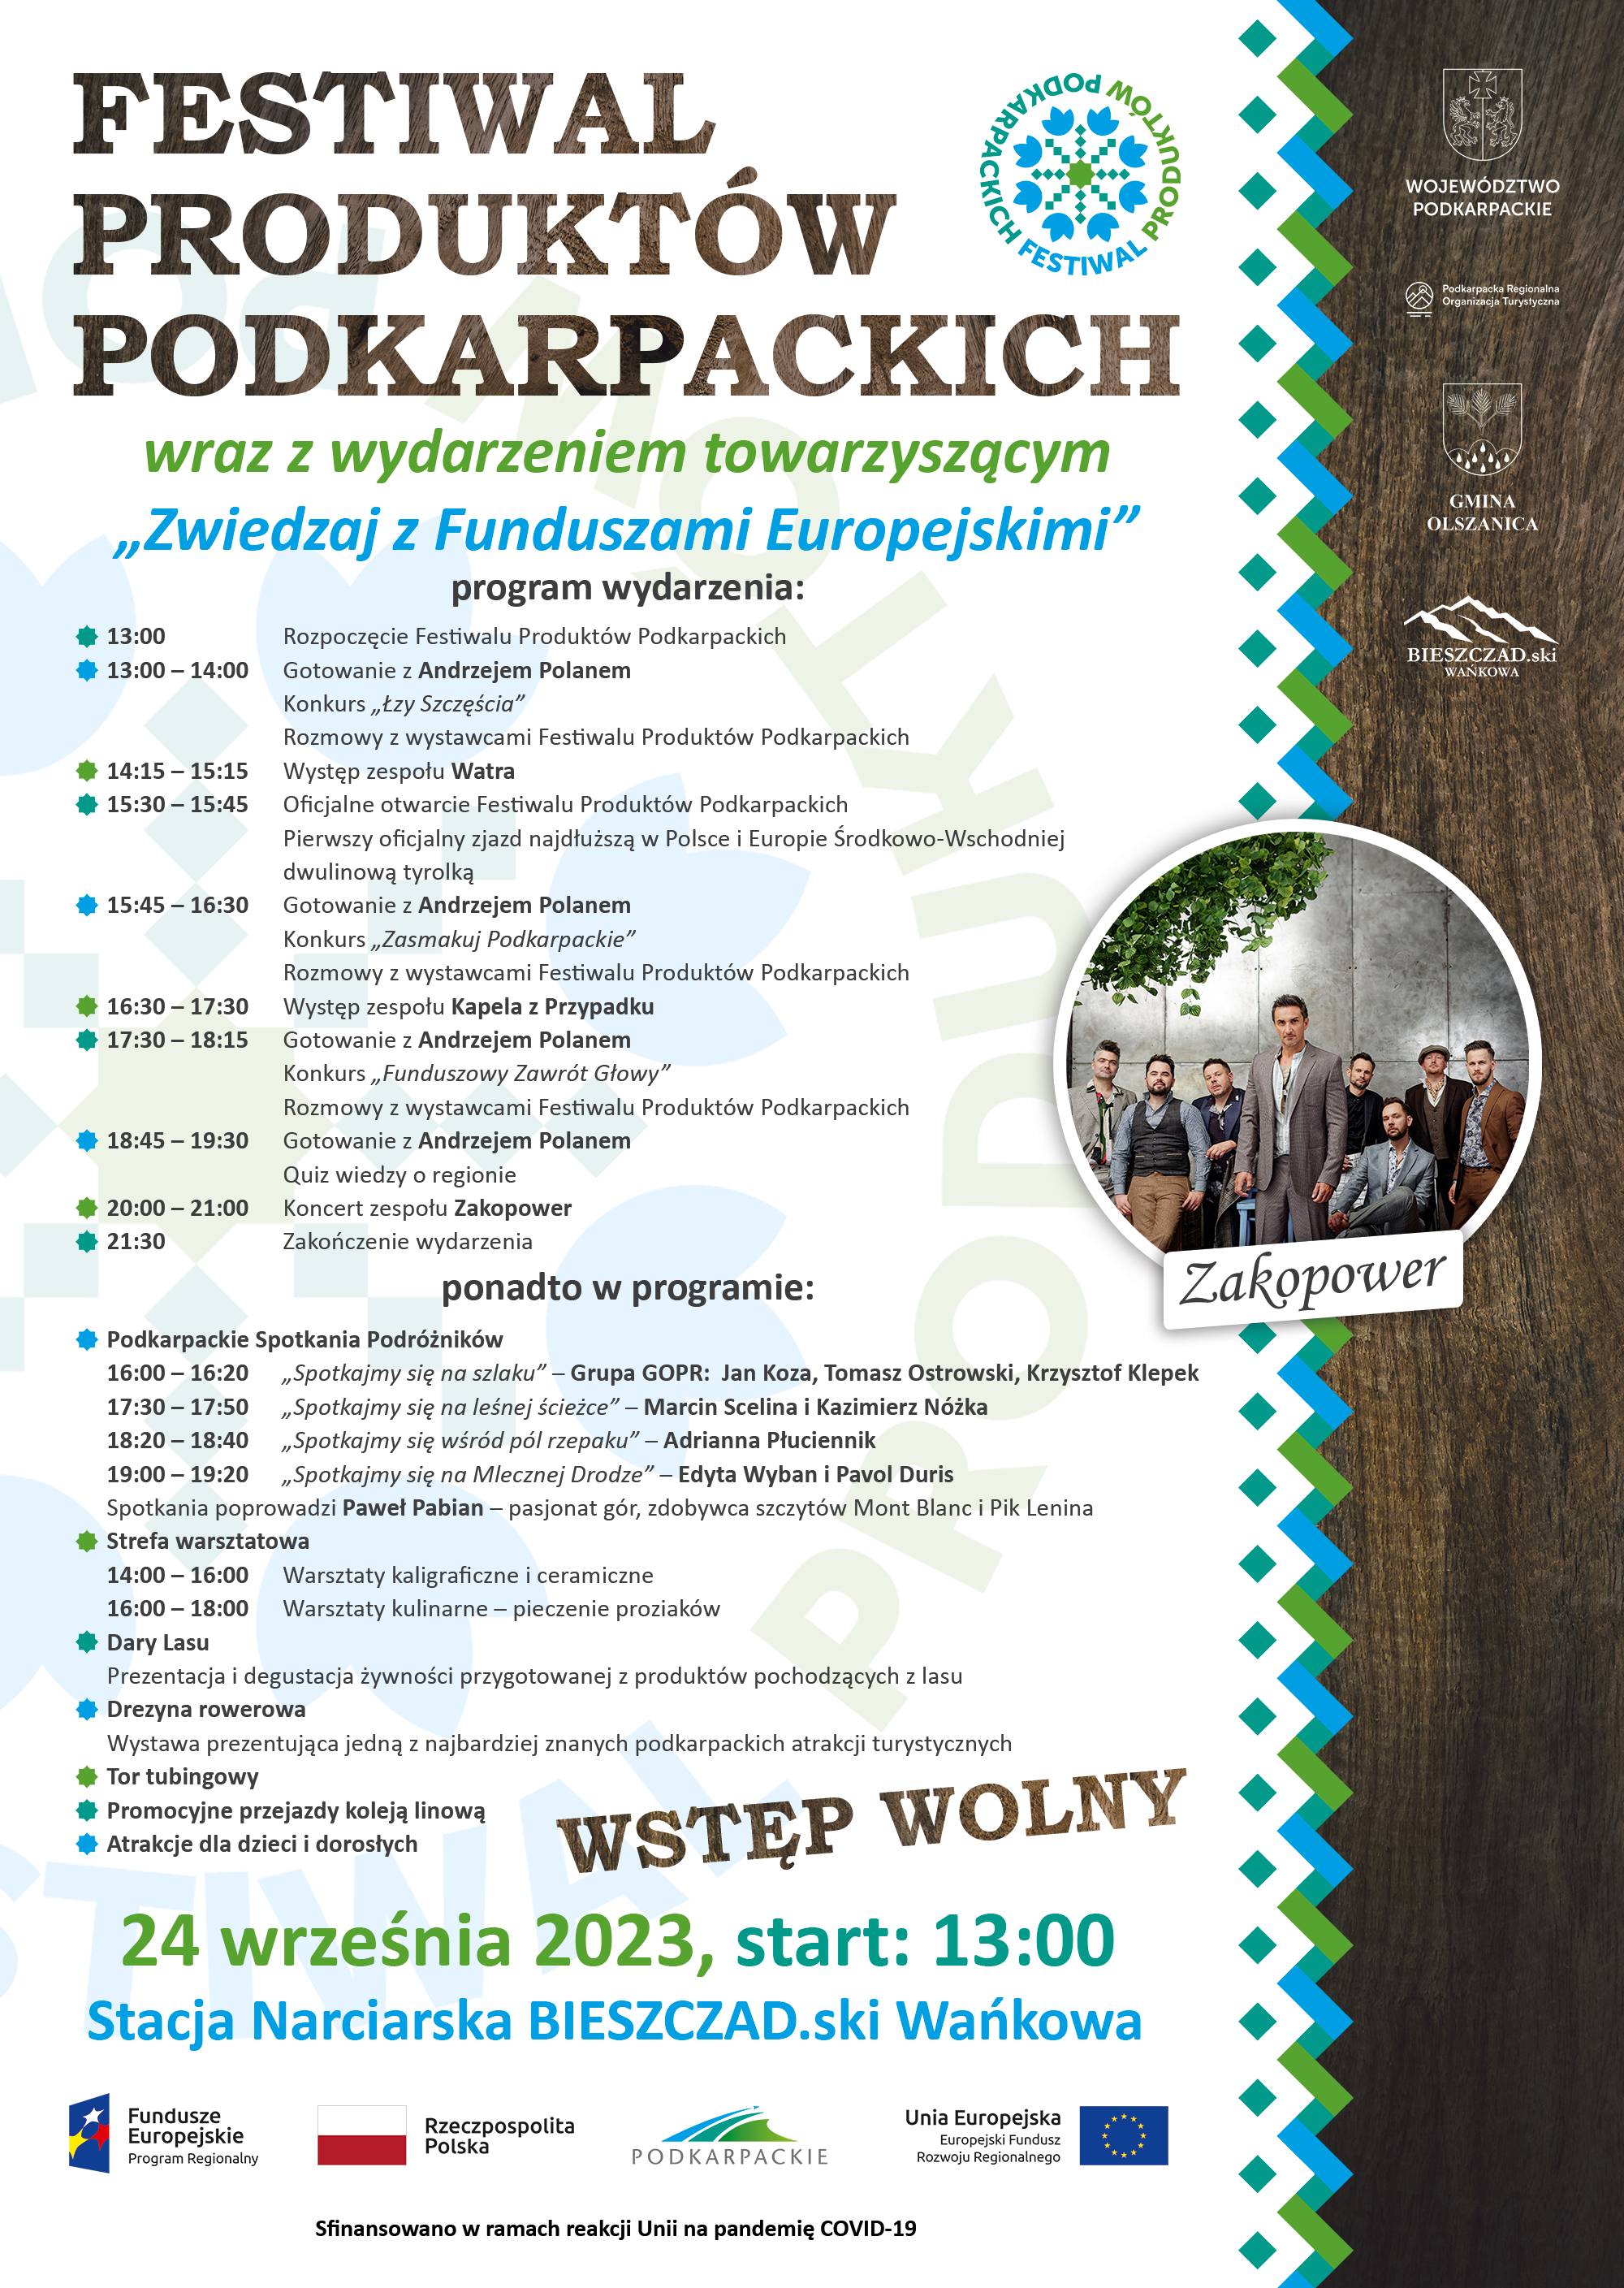 Plakat Festiwalu Produktów Podkarpackich. Plakat zawiera program wydarzenia opisany w artykule.